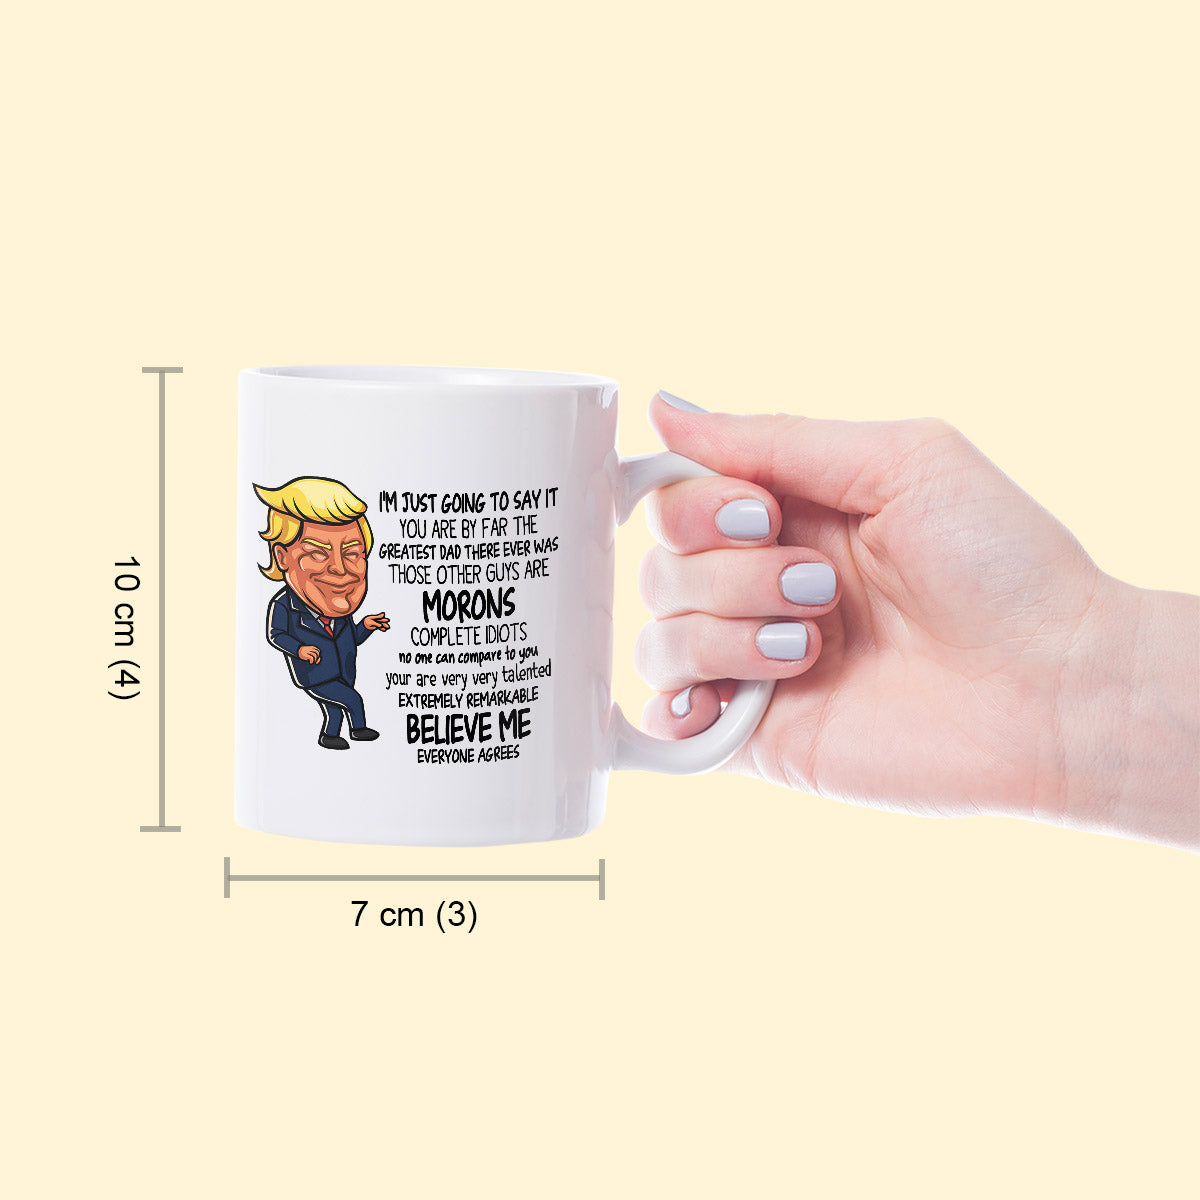 You are the Greatest Dad, Donald Trump Prank Coffee Mug